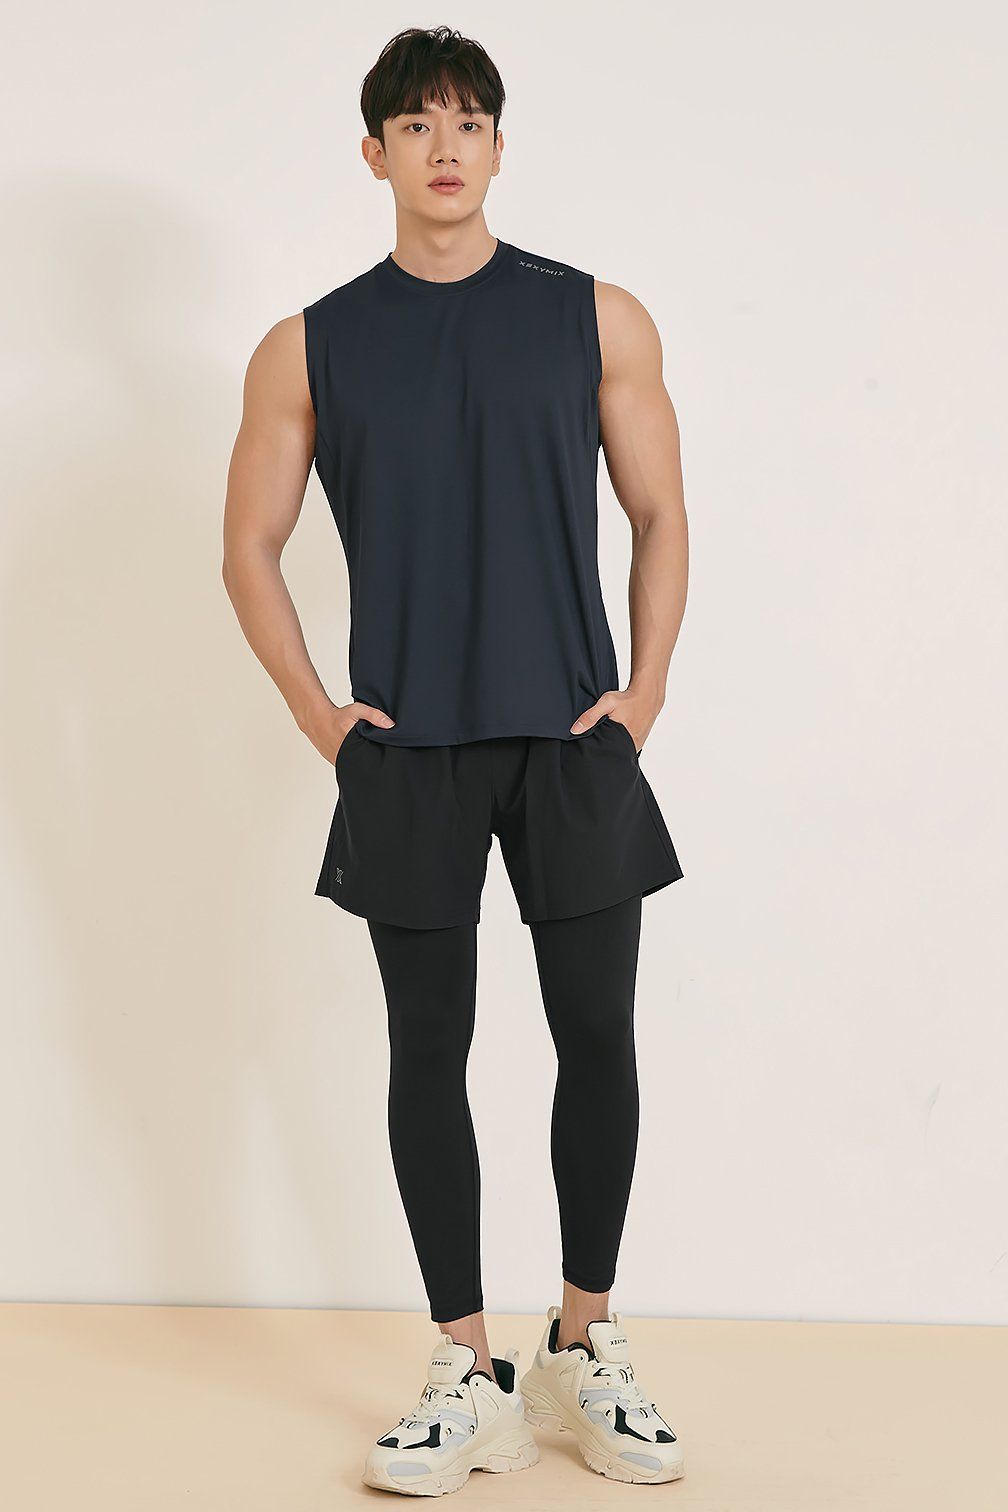  XP2121F - Quần leggings nam comfortable ice 2 in 1 Charcoal black 